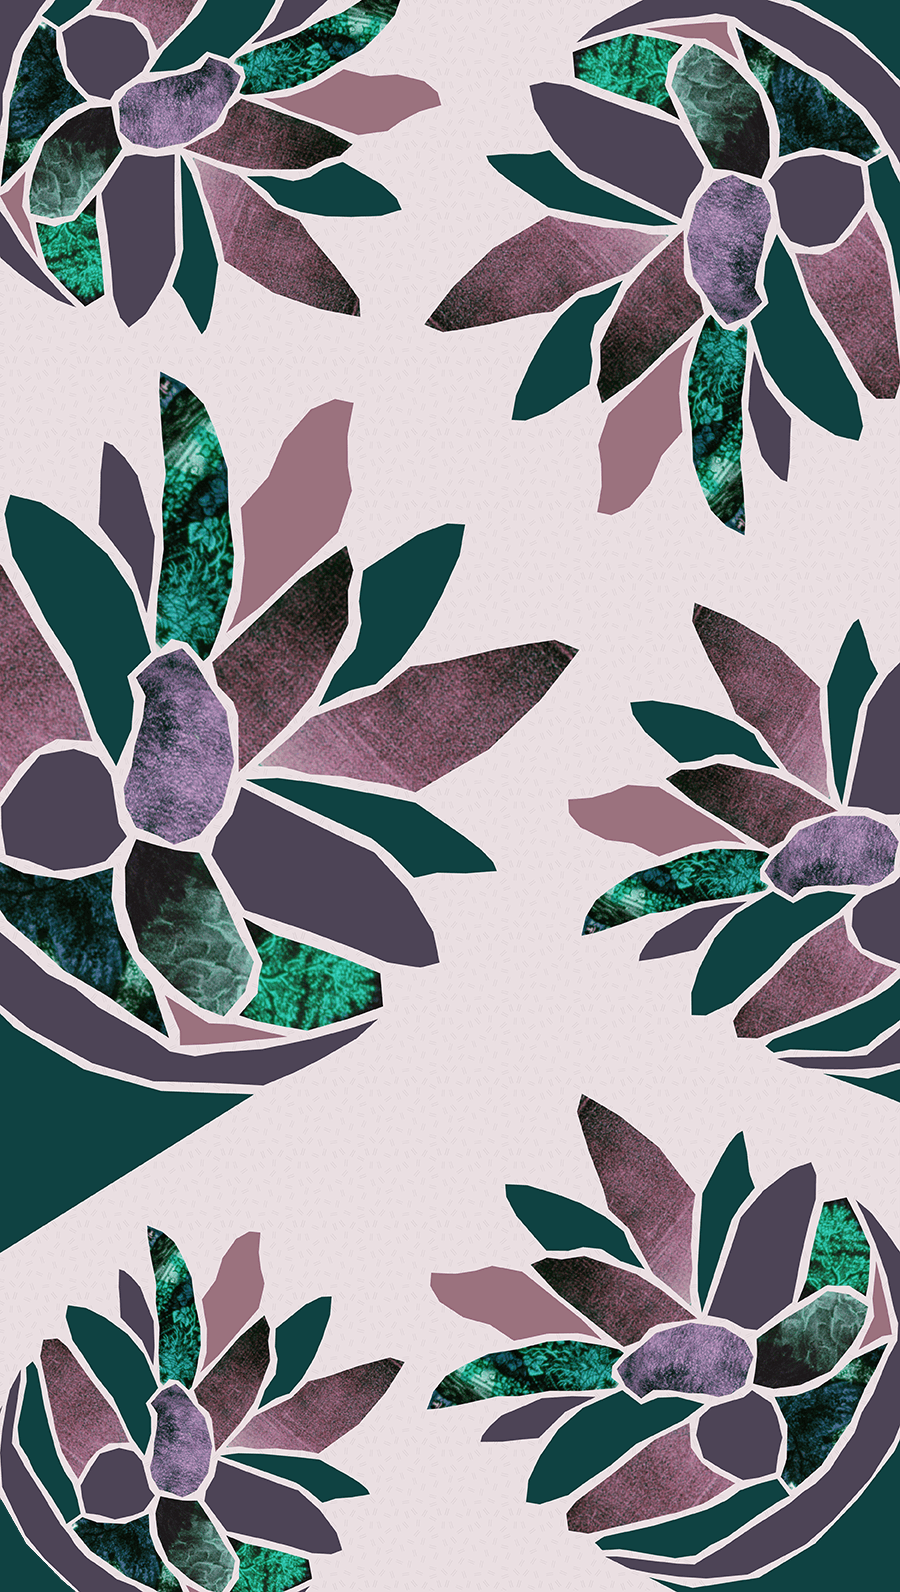 Cute Cacti Succulents IPhone Wallpaper #iphonewallpaper #wallpaper